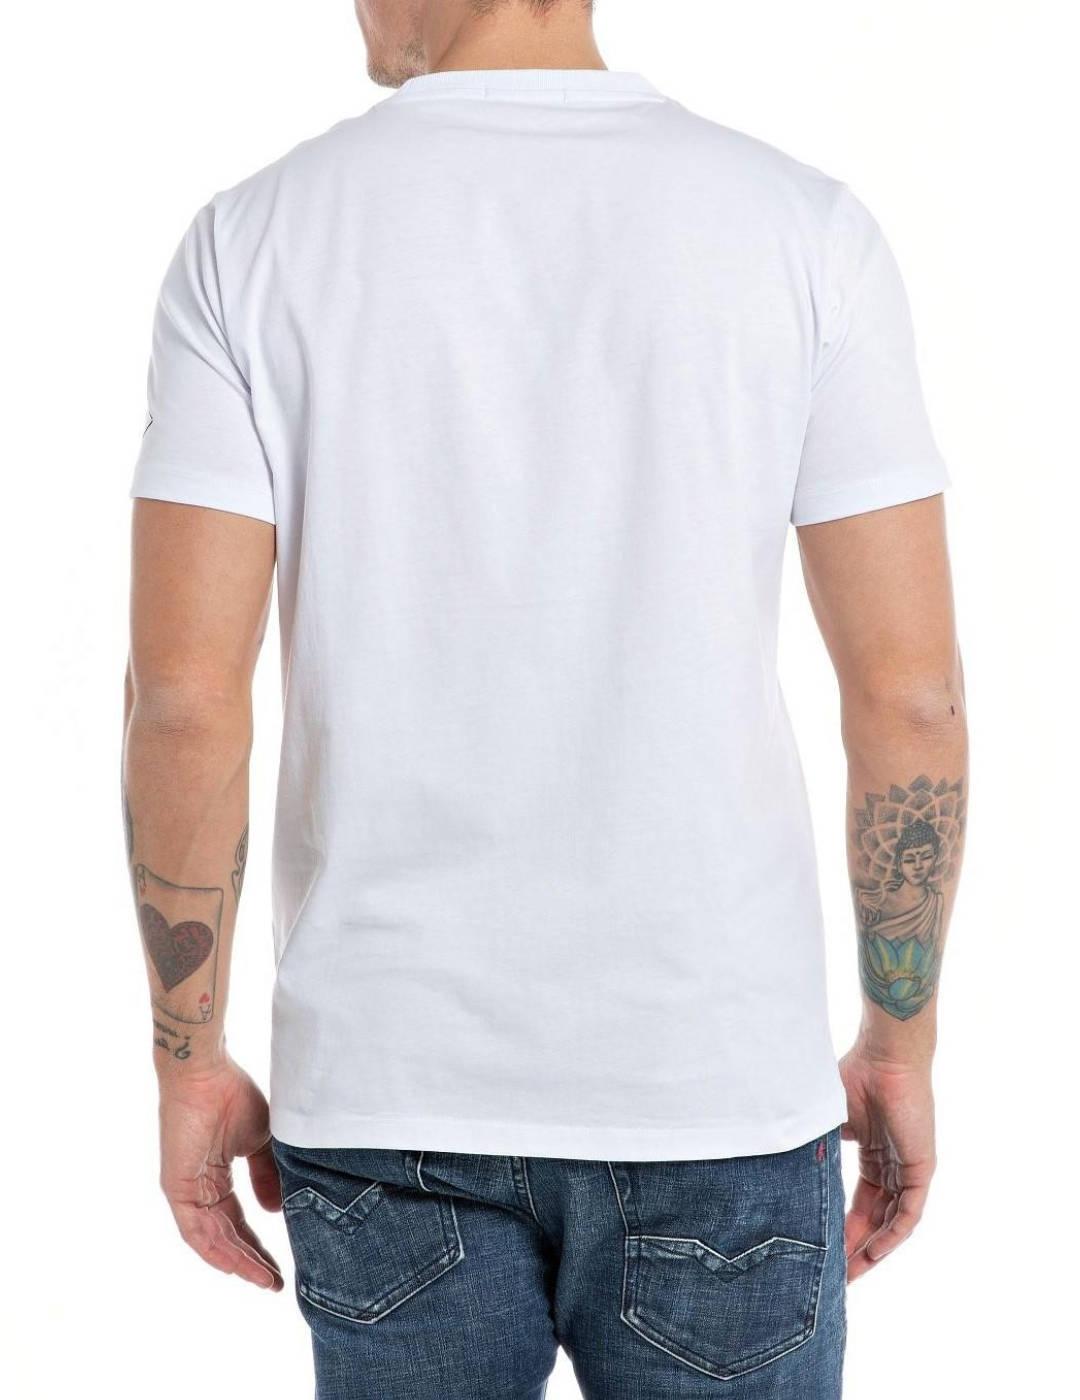 Camiseta Replay blanco perro manga corta para hombre